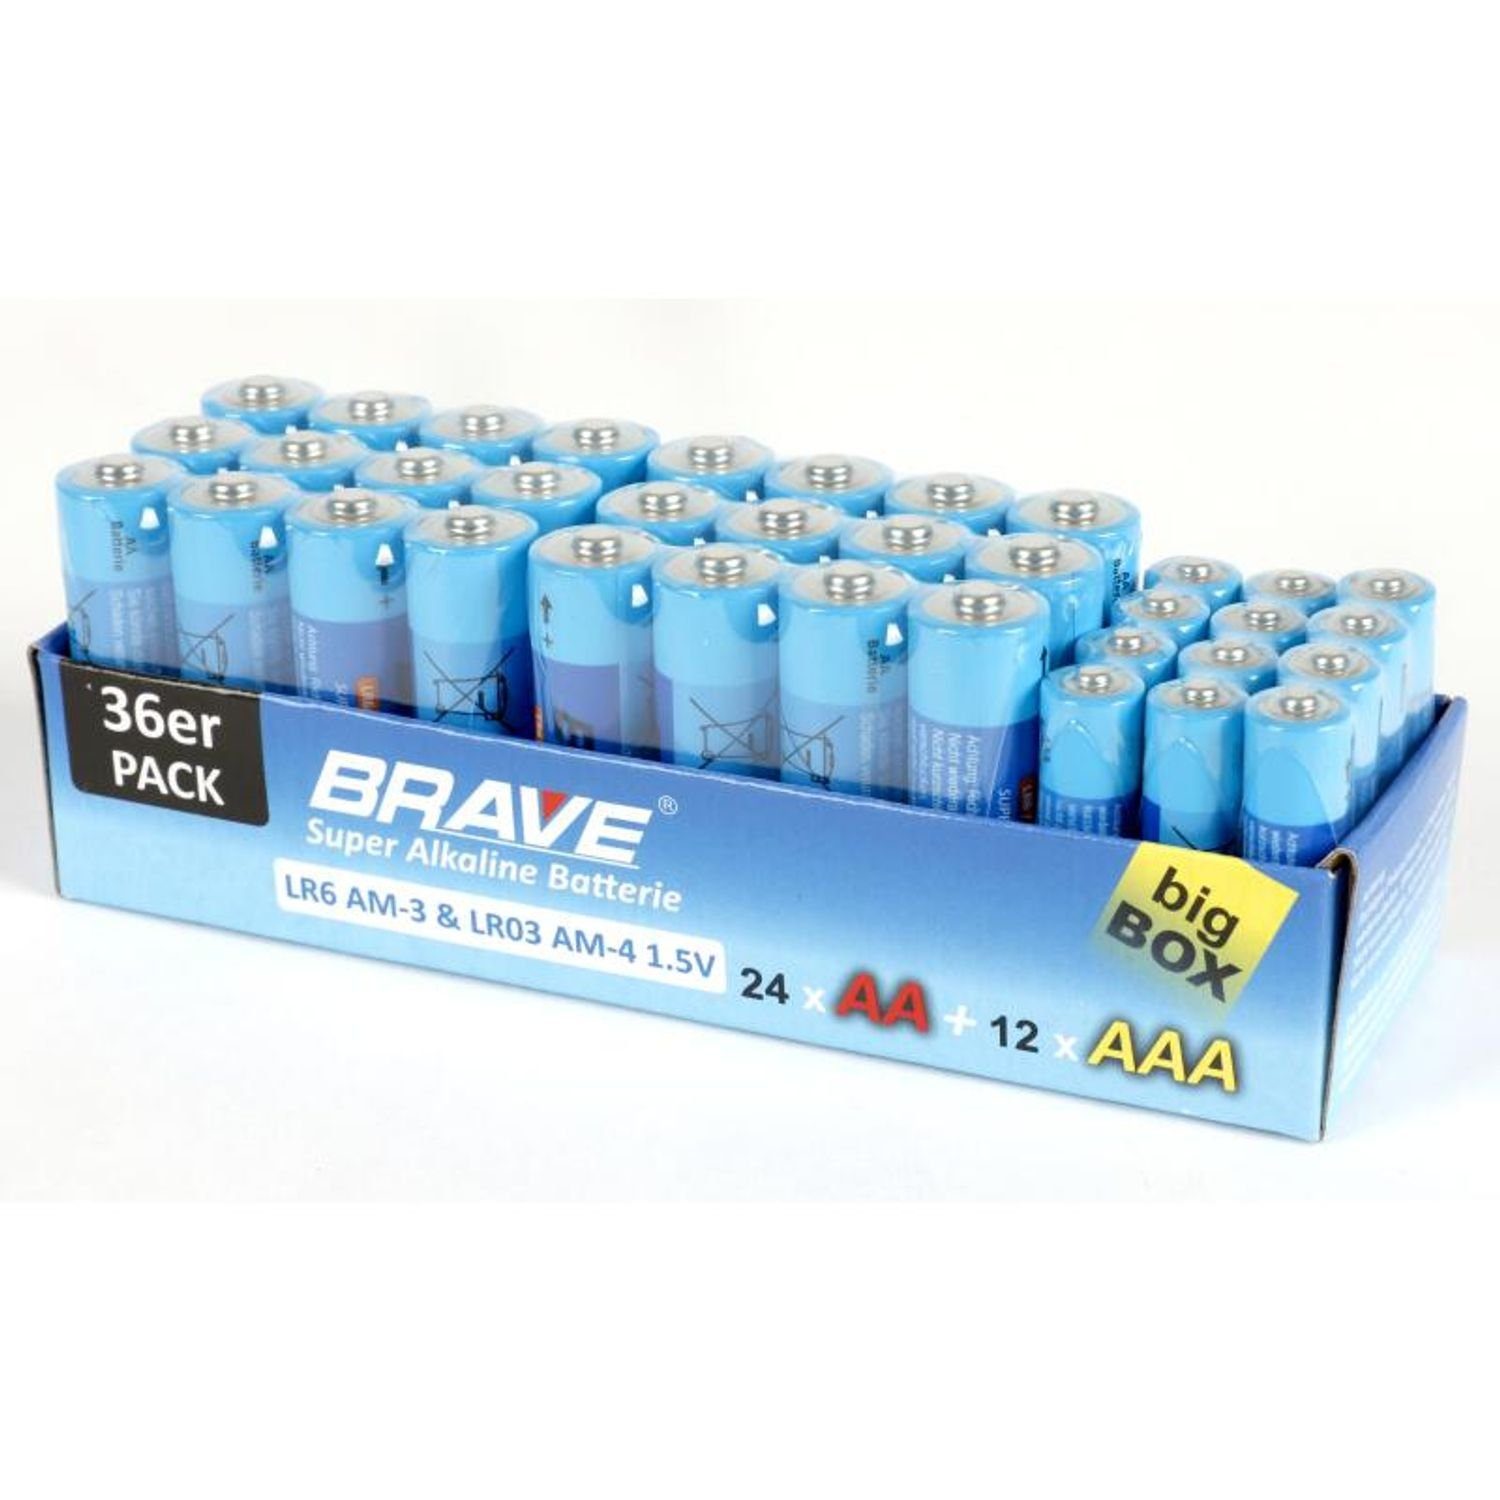 Batterie, Großpackung AAA 24x 36er-Packung Brave St) Alkaline Batterien BURI (864 AA &